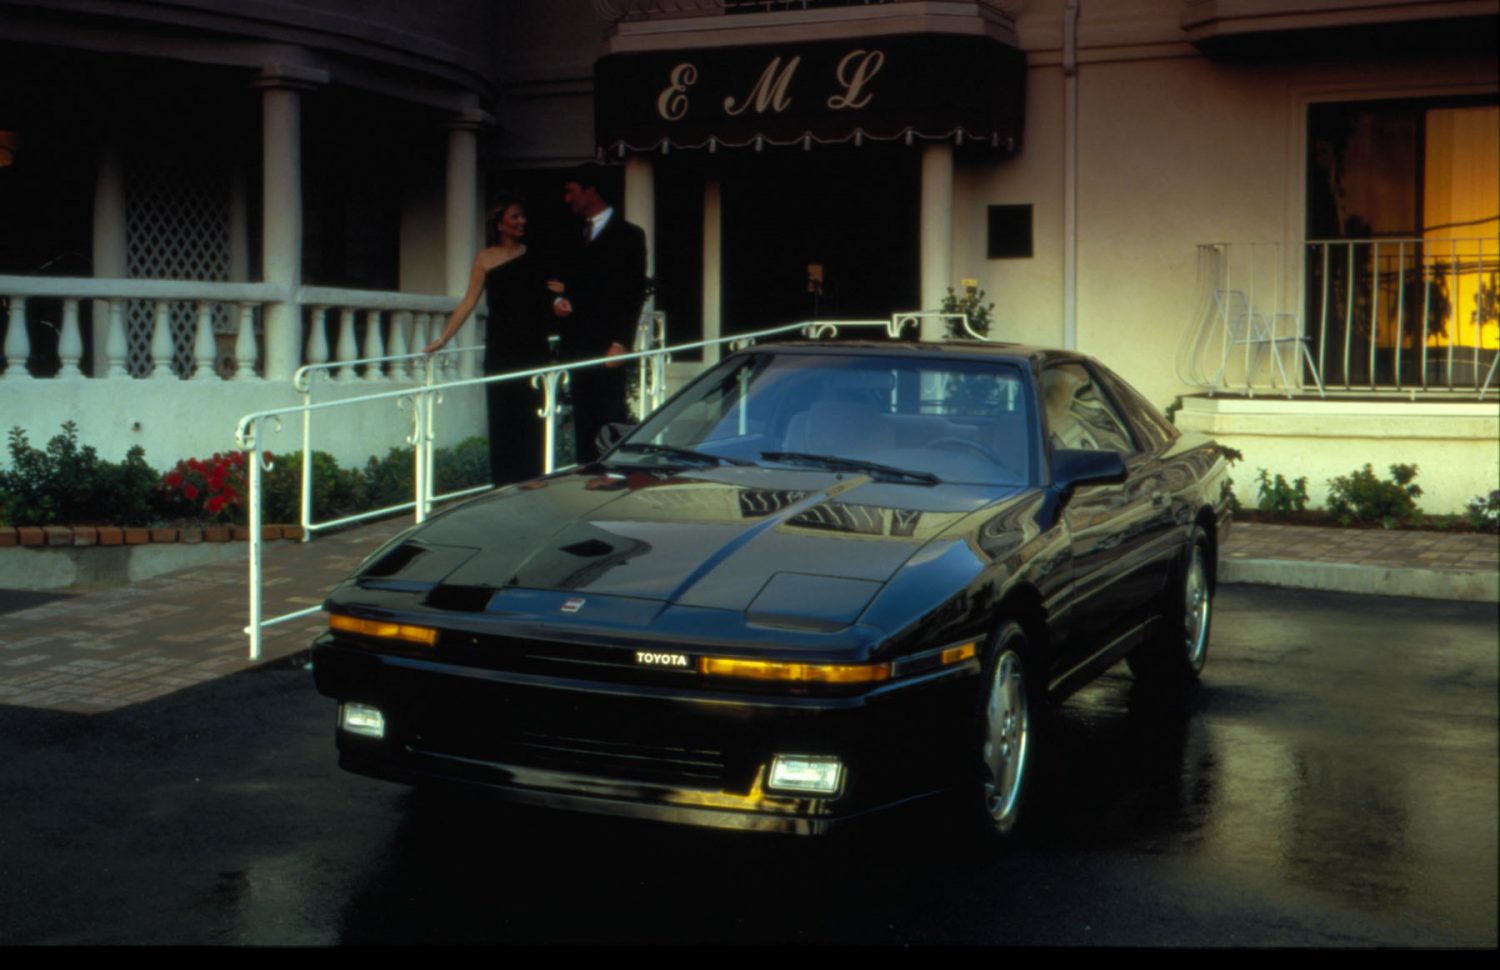 A black 1987 supra parked at a restaurant